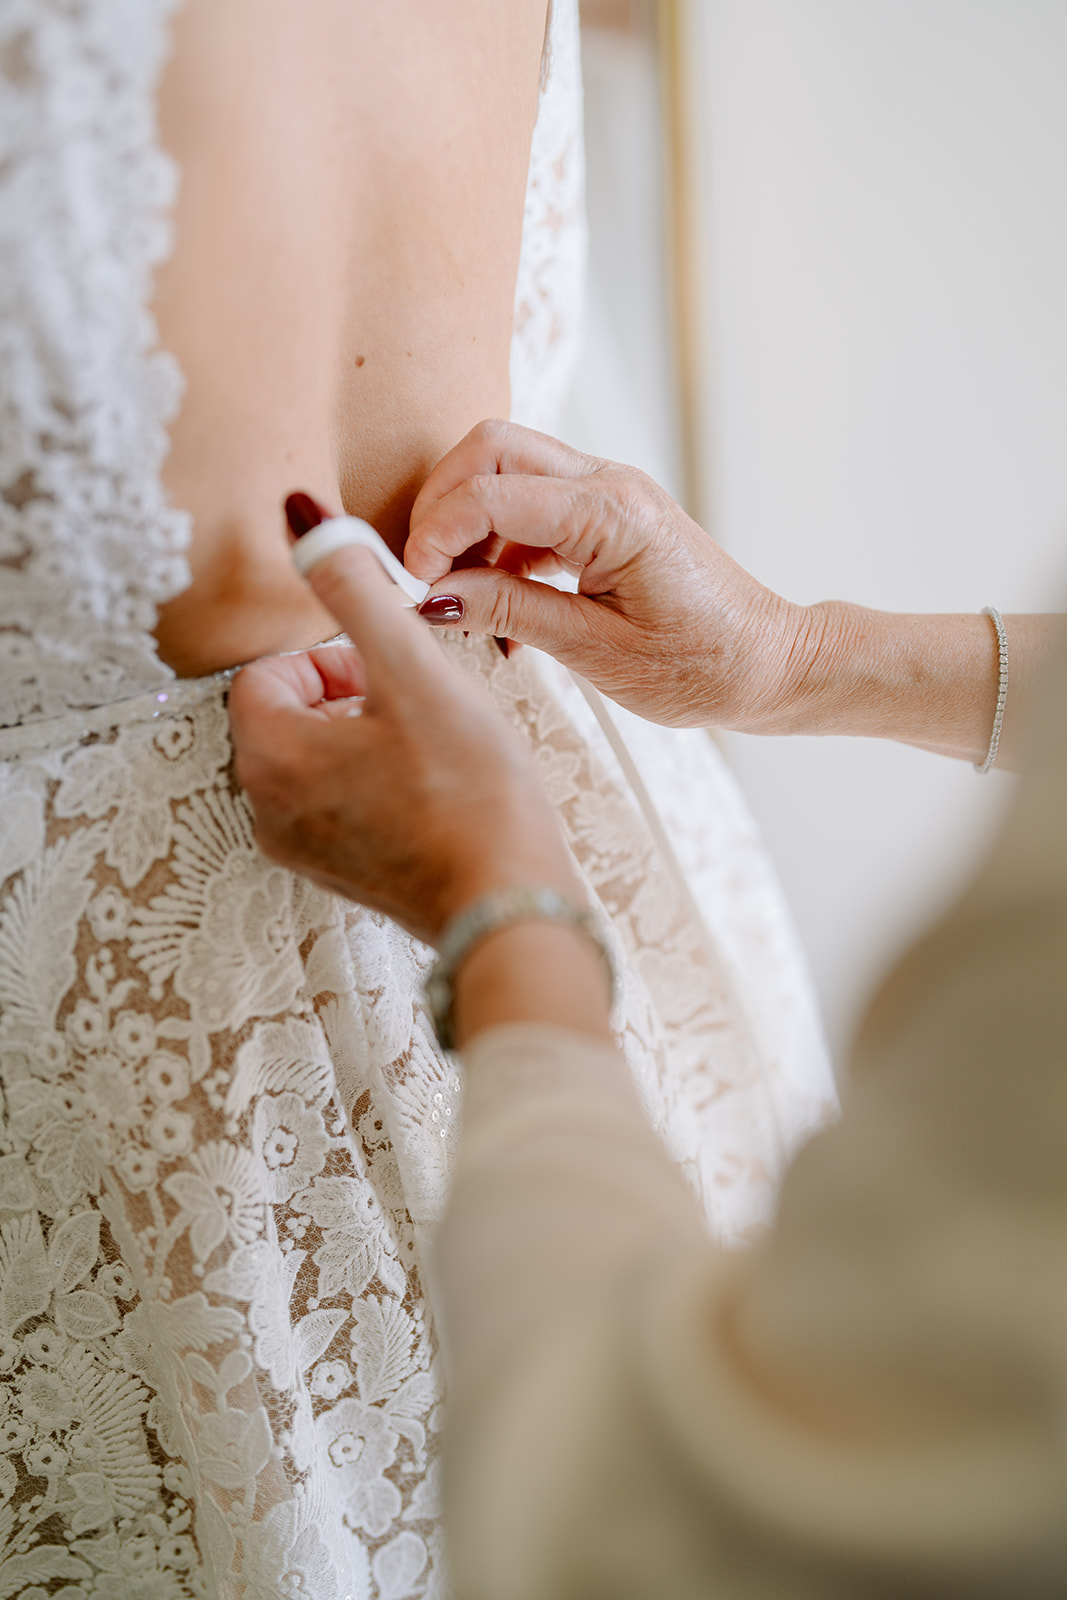 brides mum fastening her lace wedding dress buttons